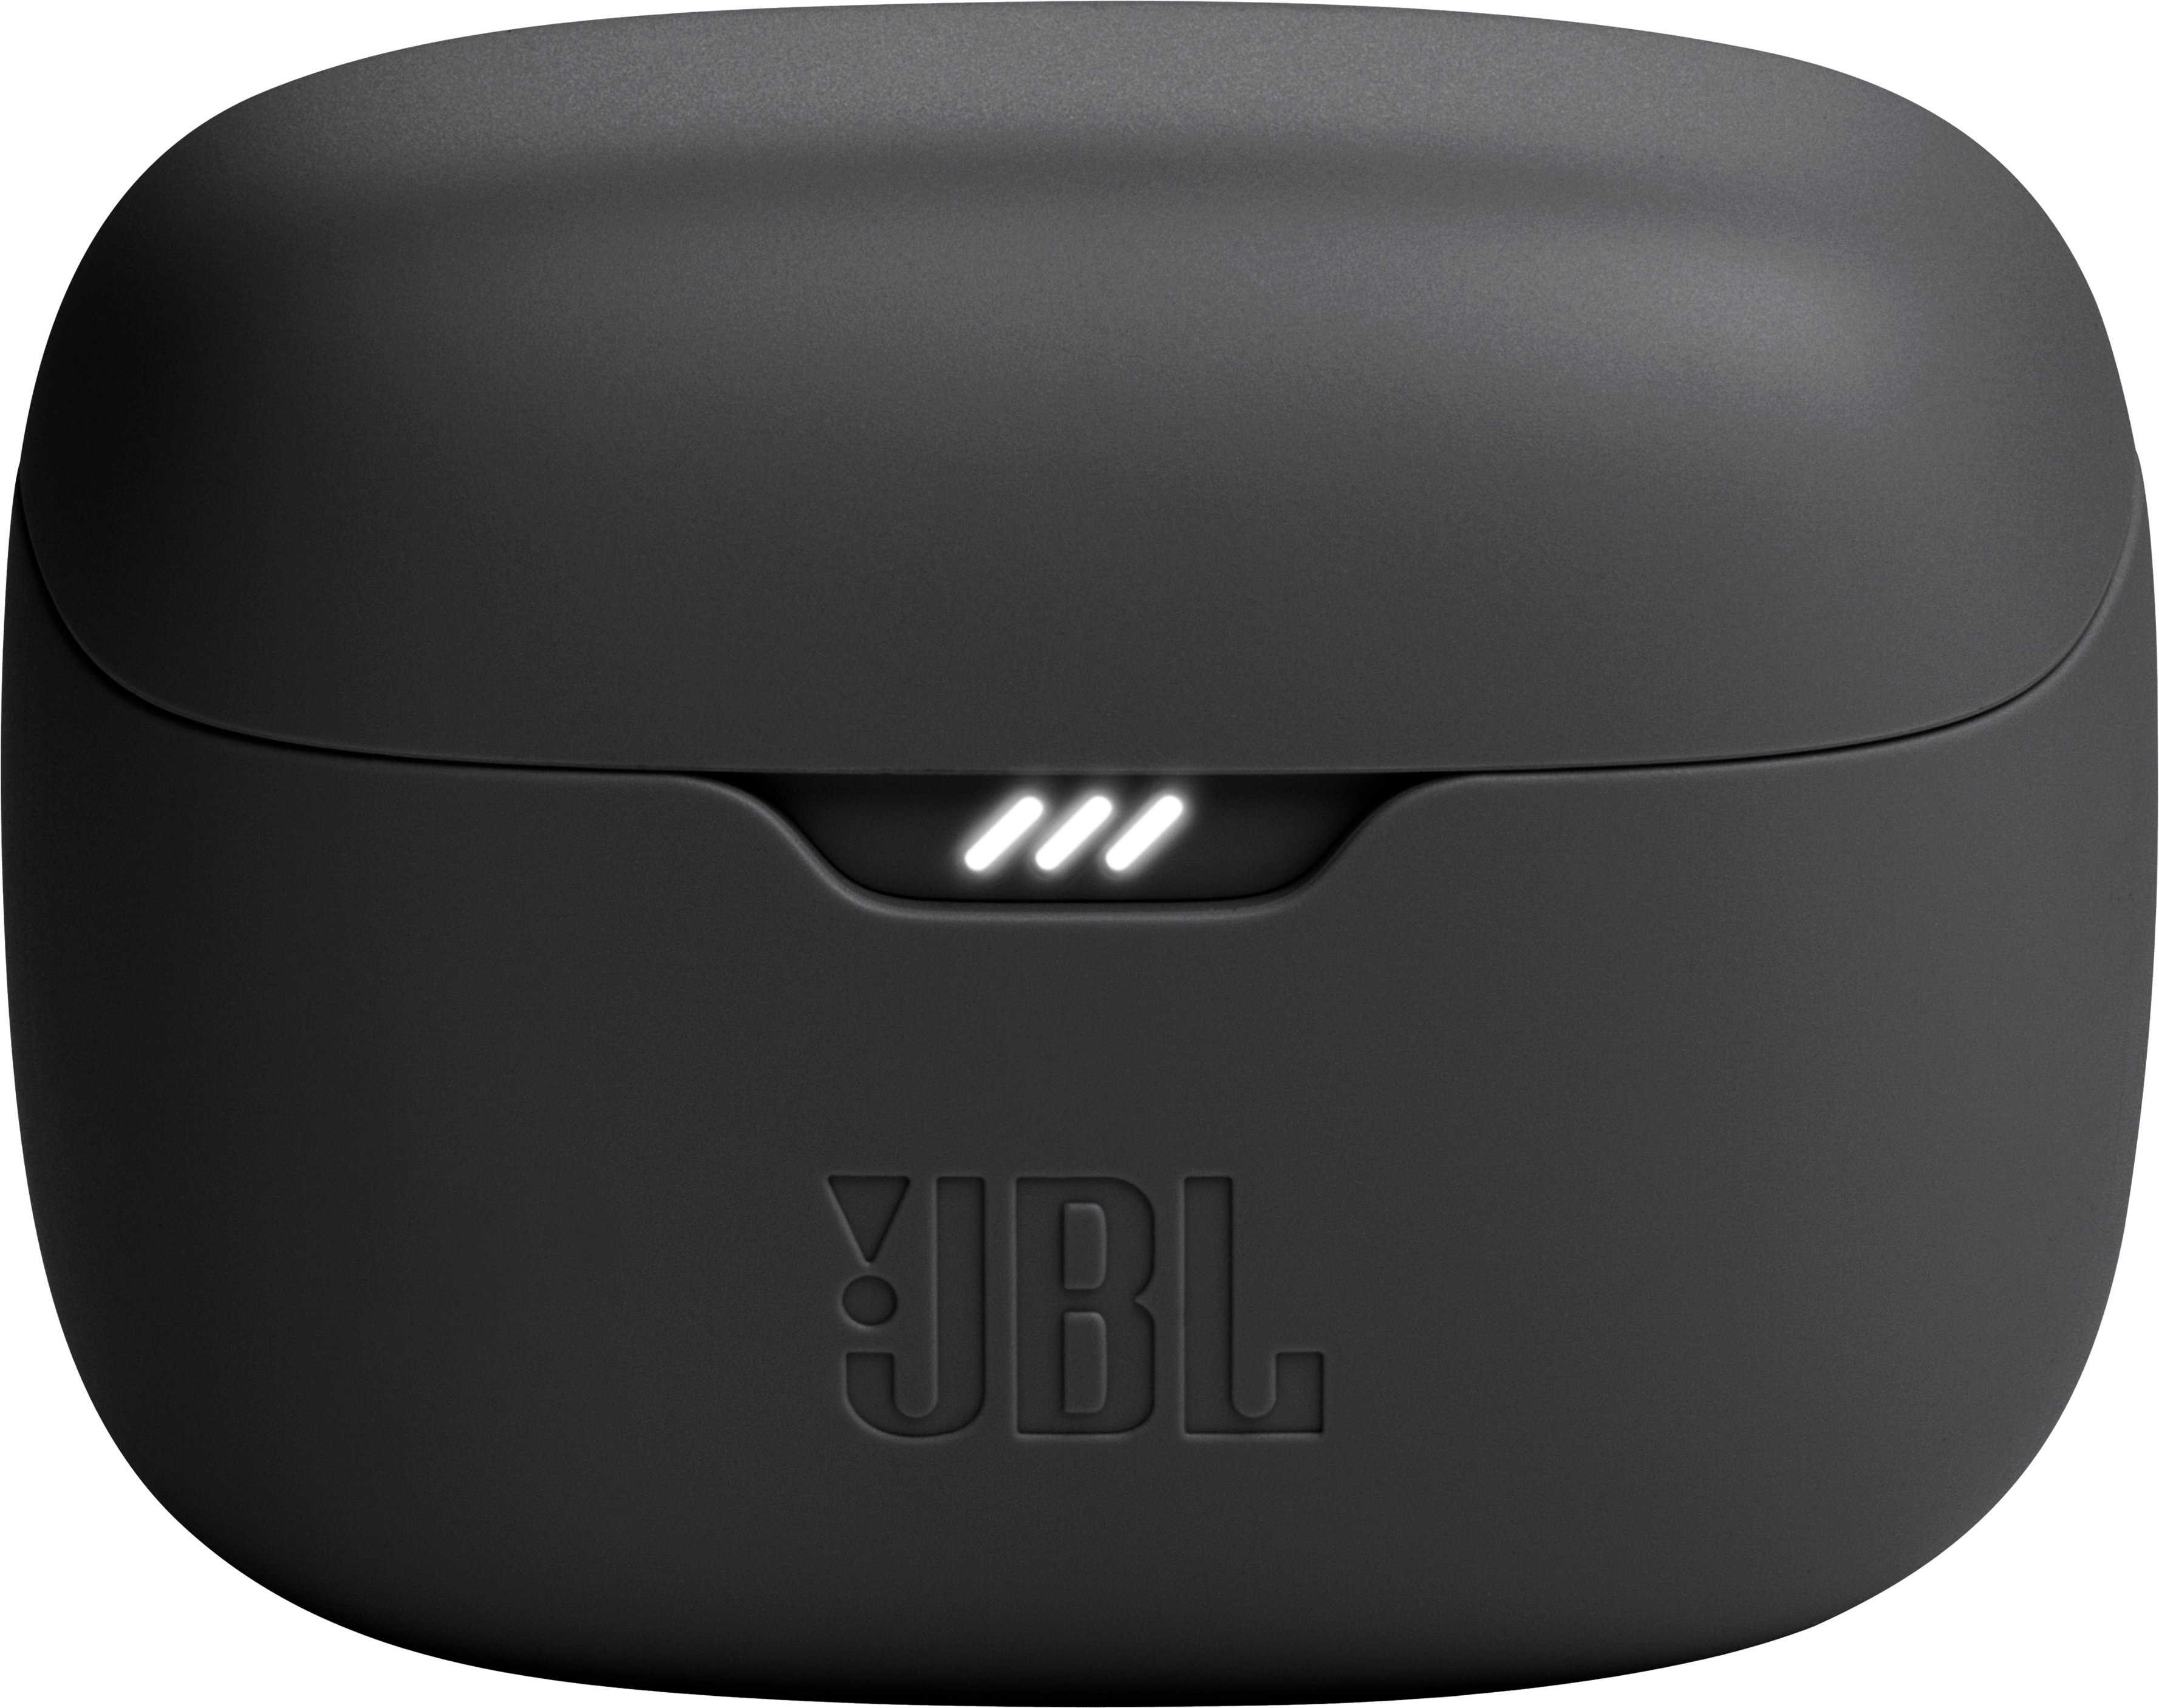 Black Airpod (JBL Tune 120TWS Earbuds) at Rs 5164/piece in Mumbai